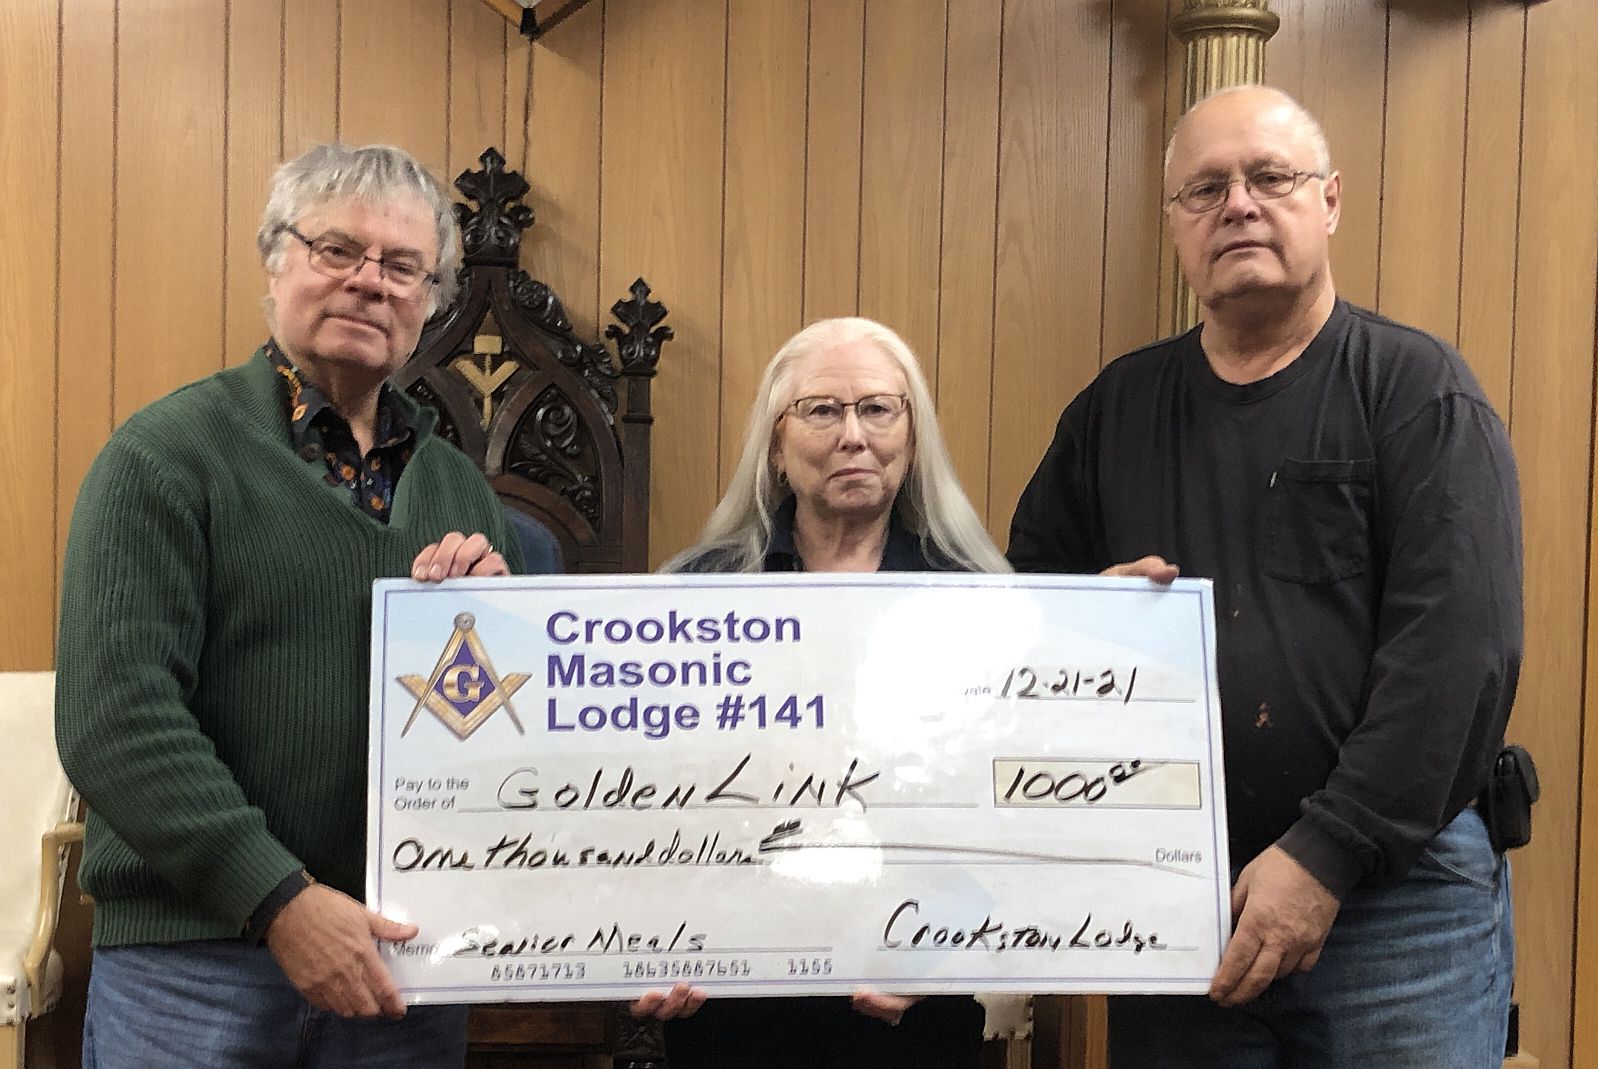 Minnesota/U.S. - Crookston Freemasons and Shriners made multiple donations